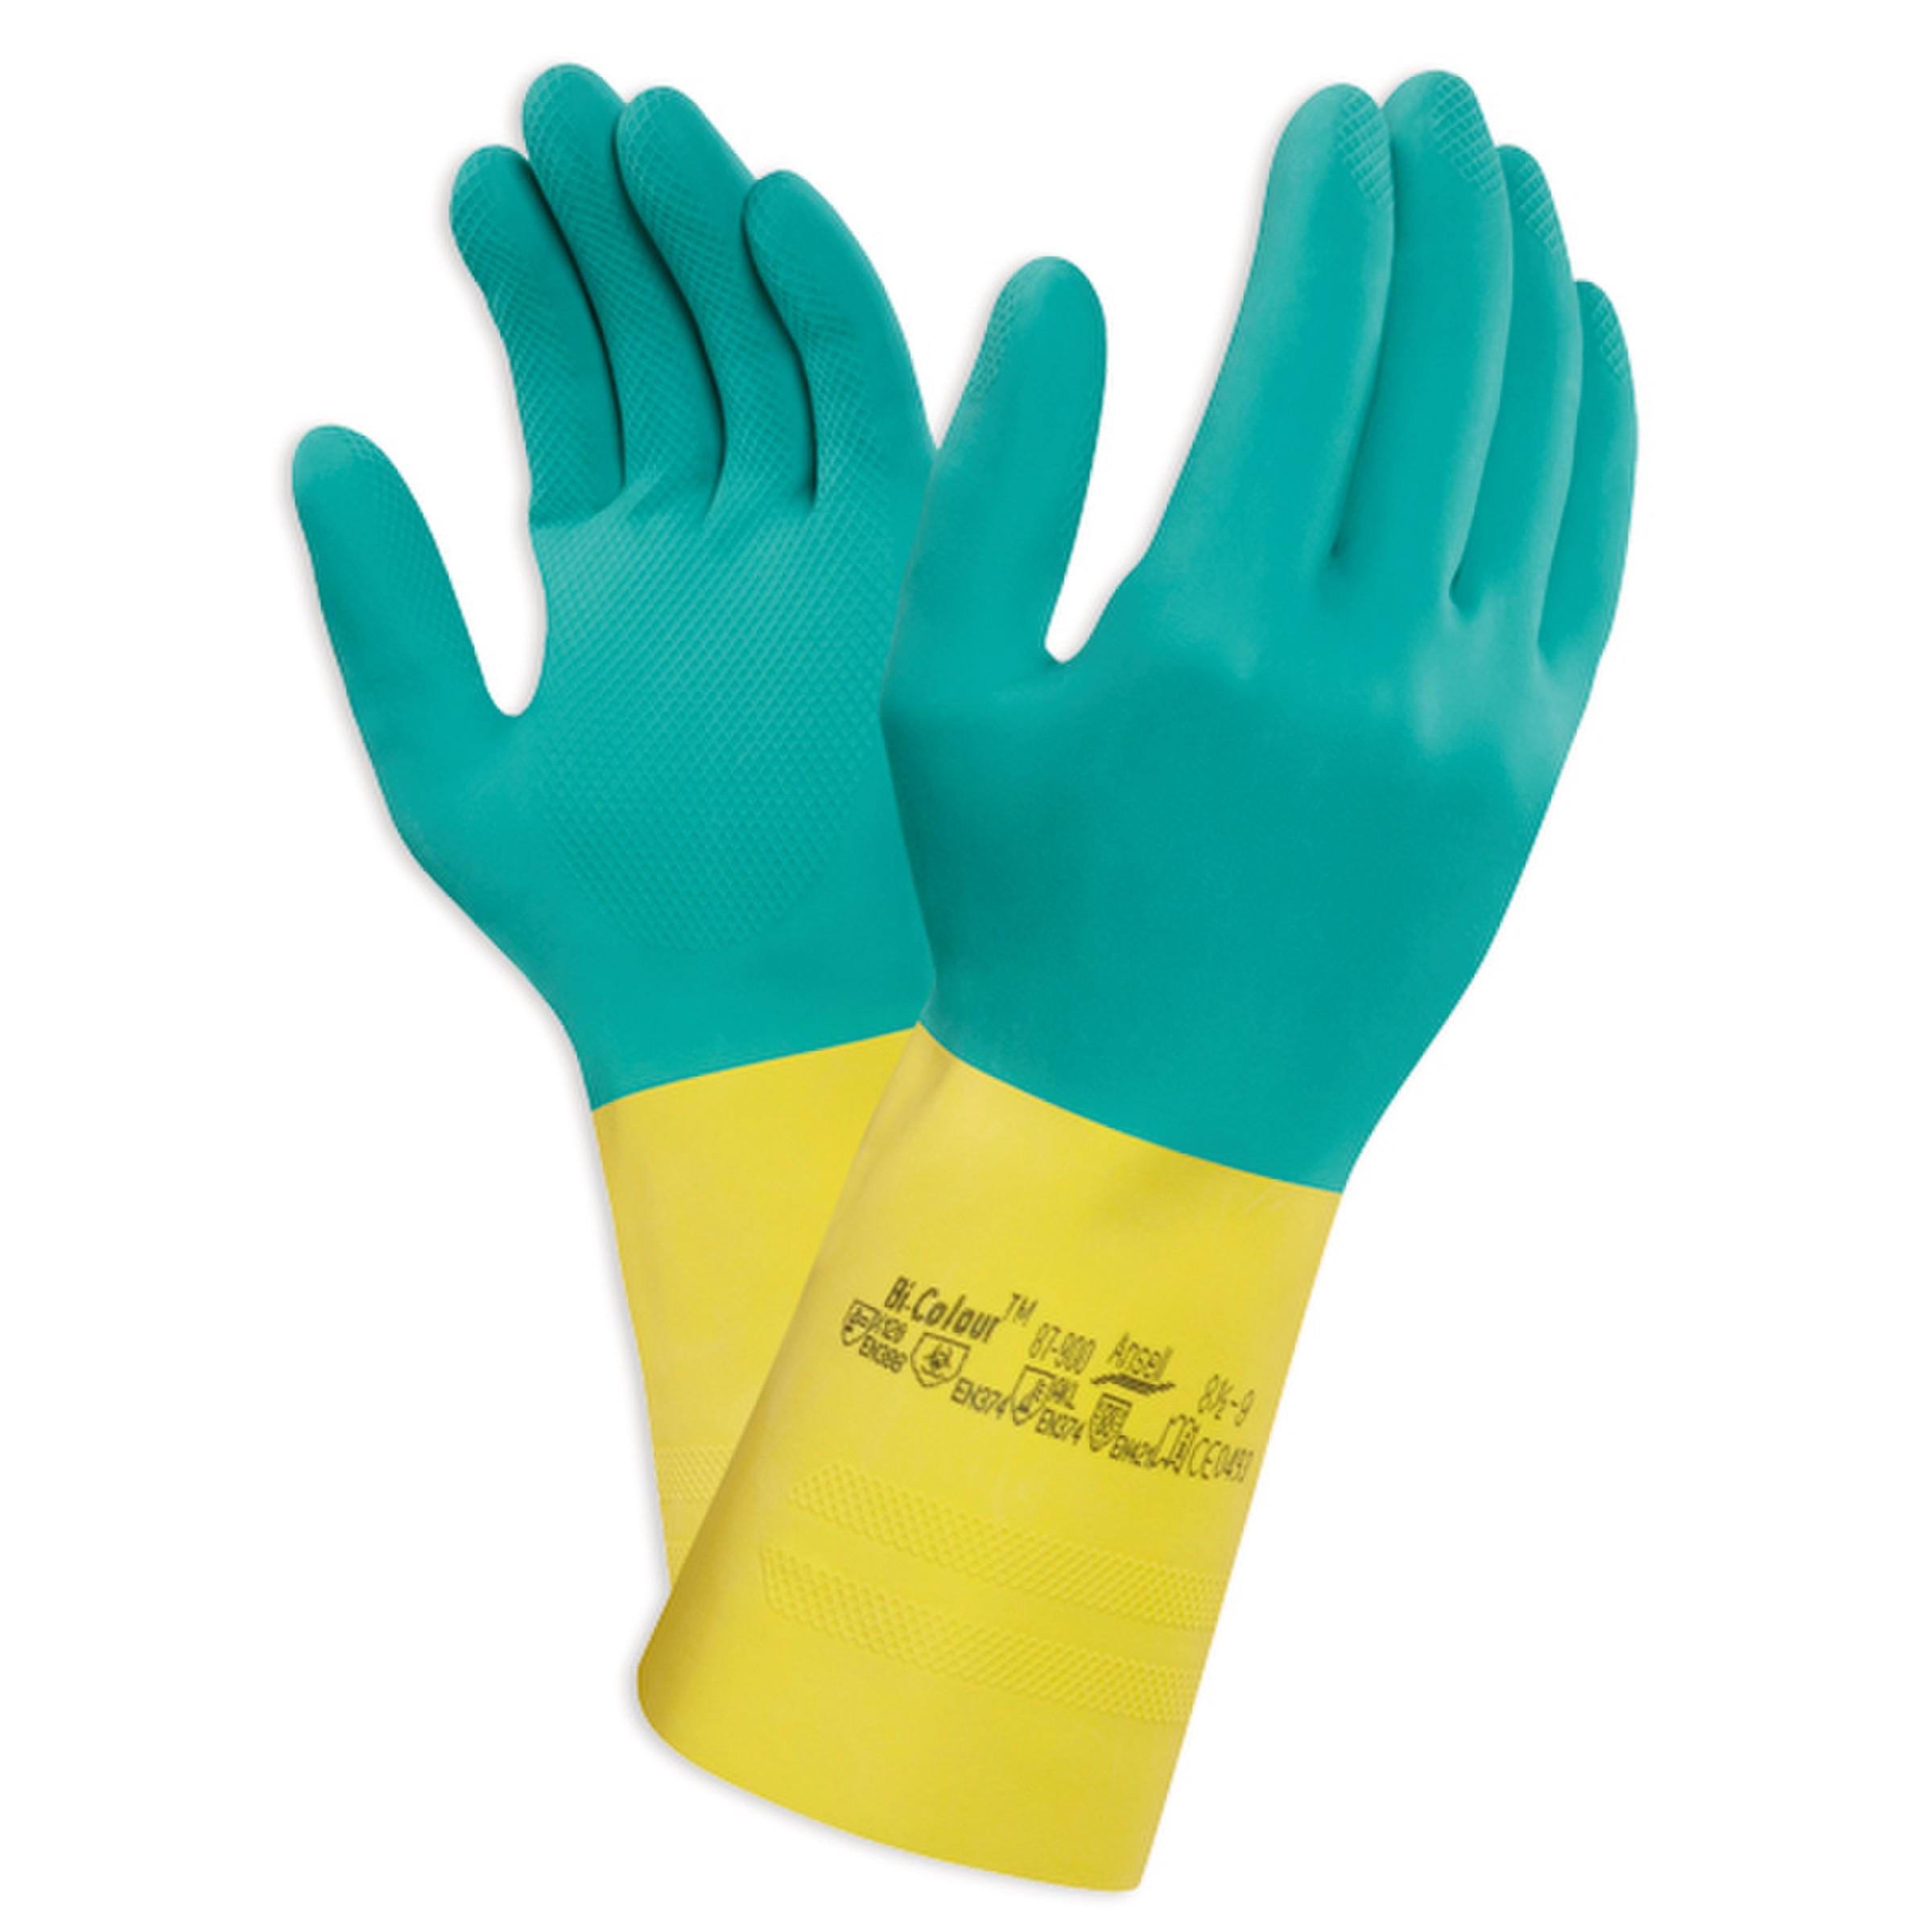 Busters Boa Clip gants de travail M latex vert